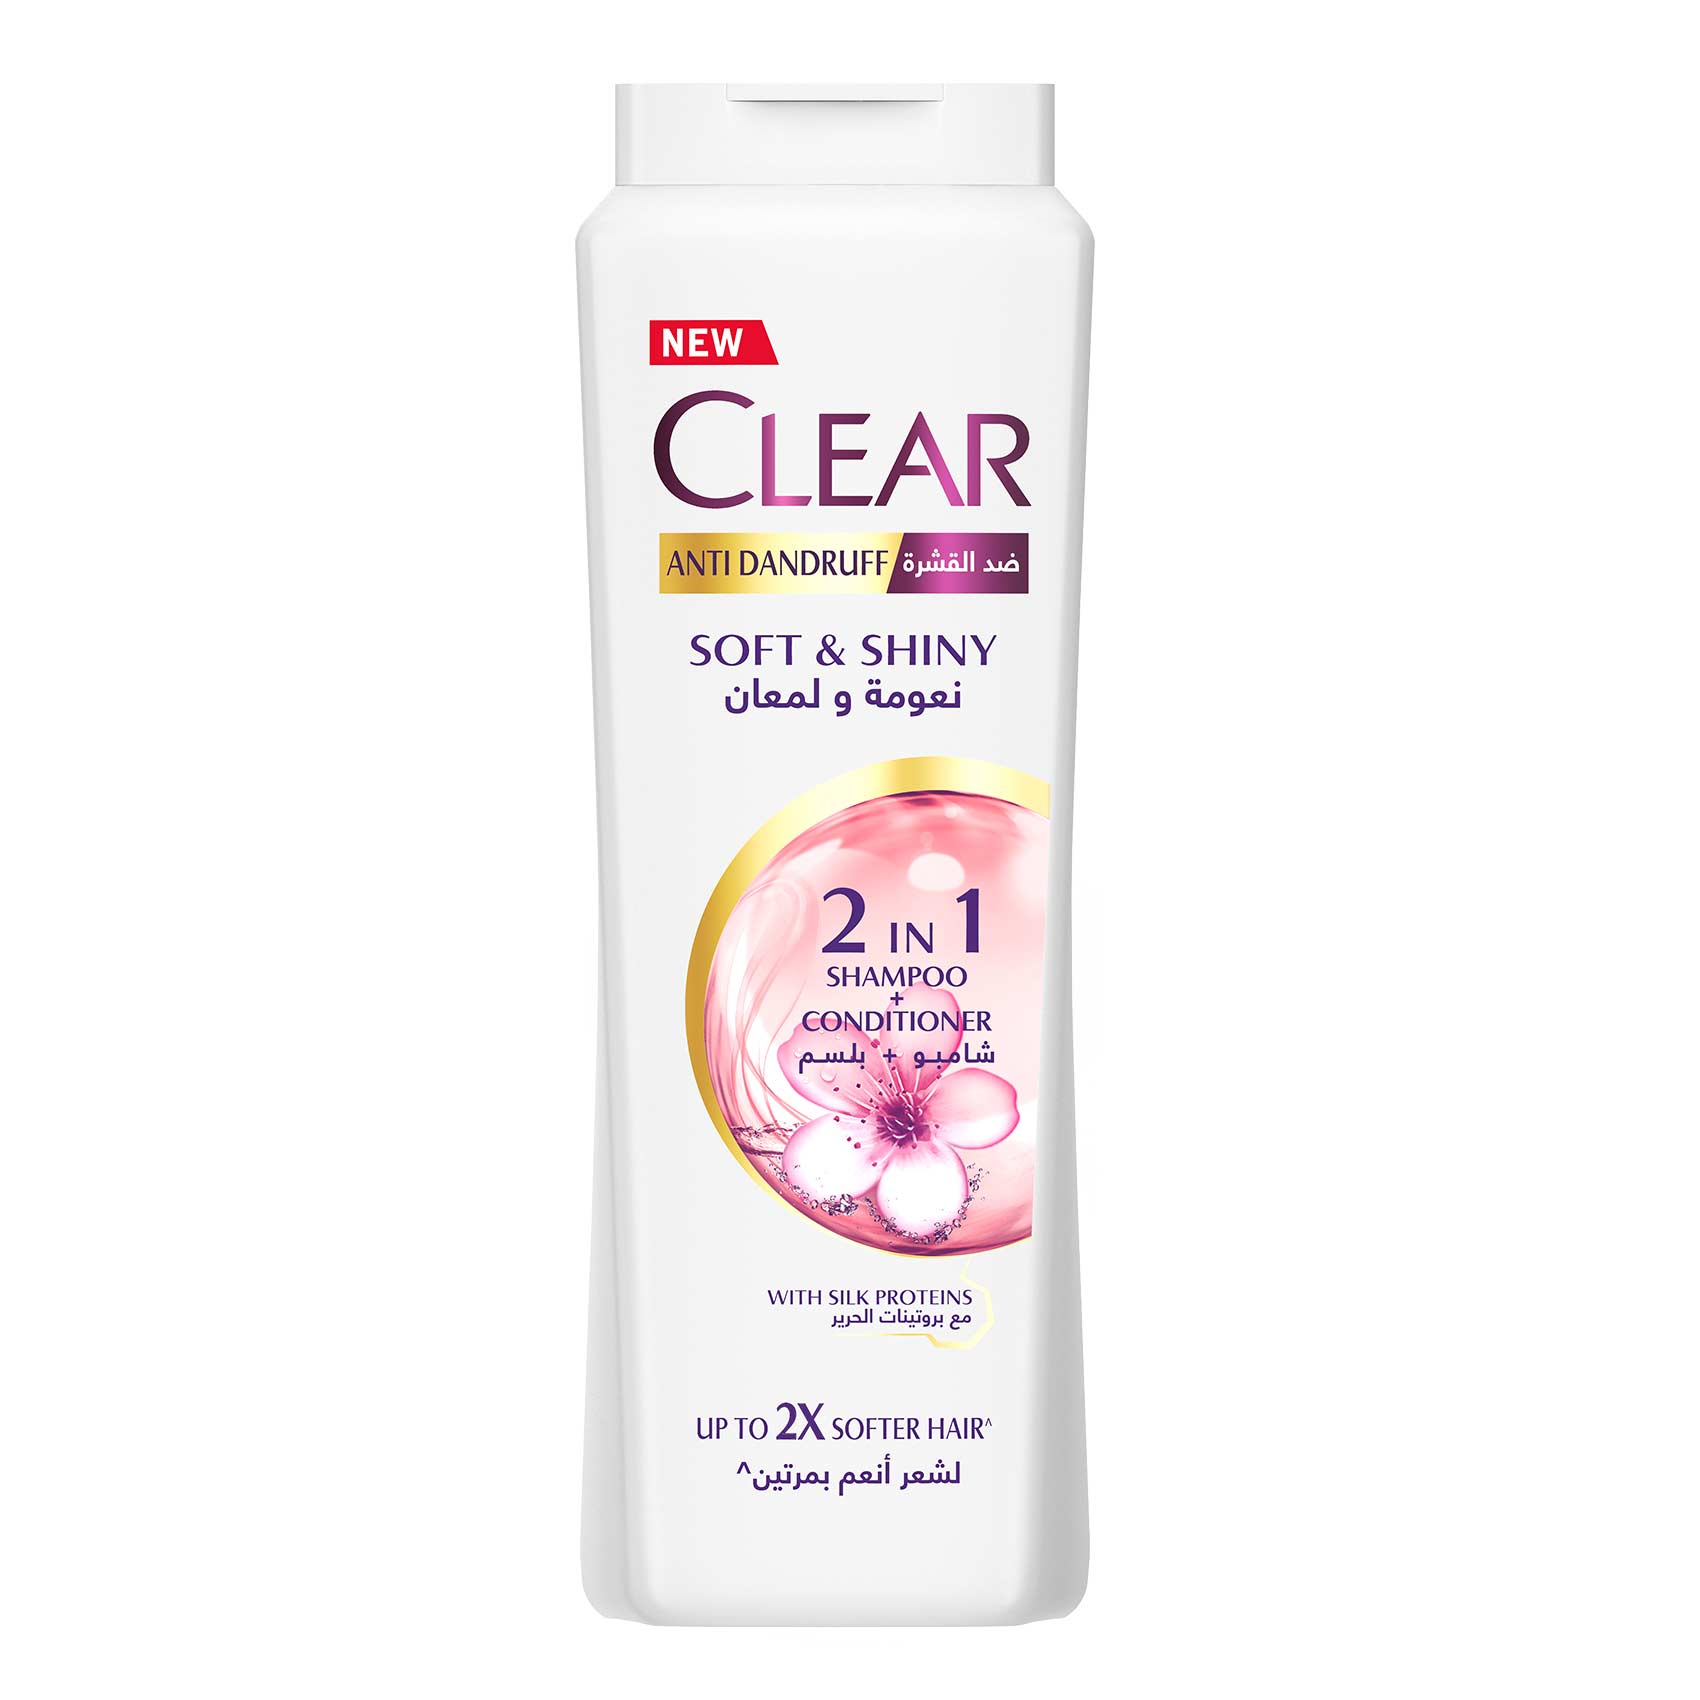 Clear Soft And Shiny Anti Dandruff Shampoo Plus Conditioner 360ml